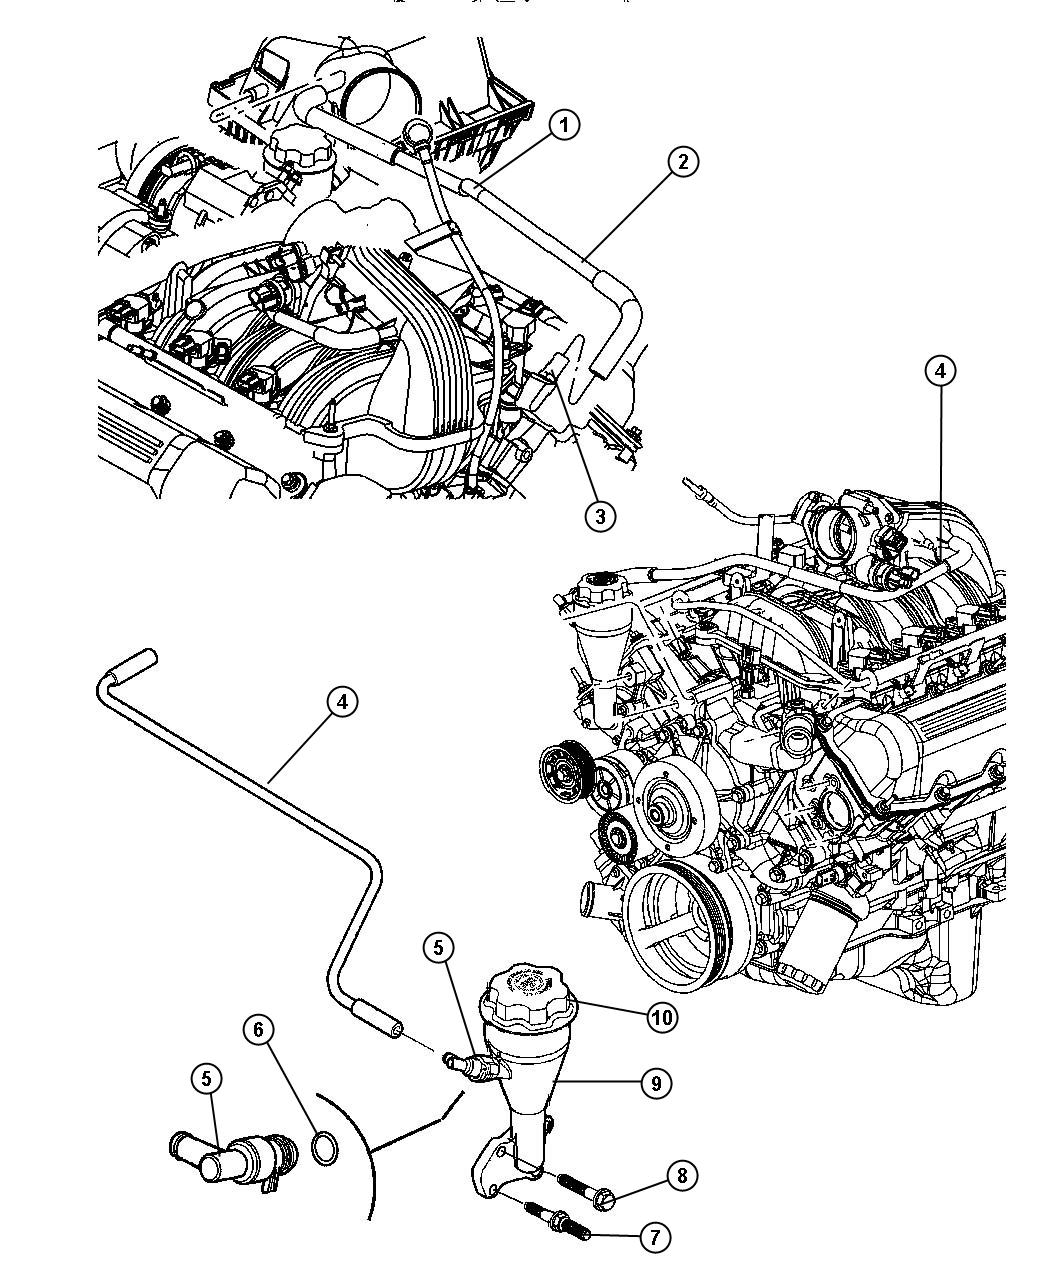 3 7 V6 Engine Diagram - Box Wiring Diagram •